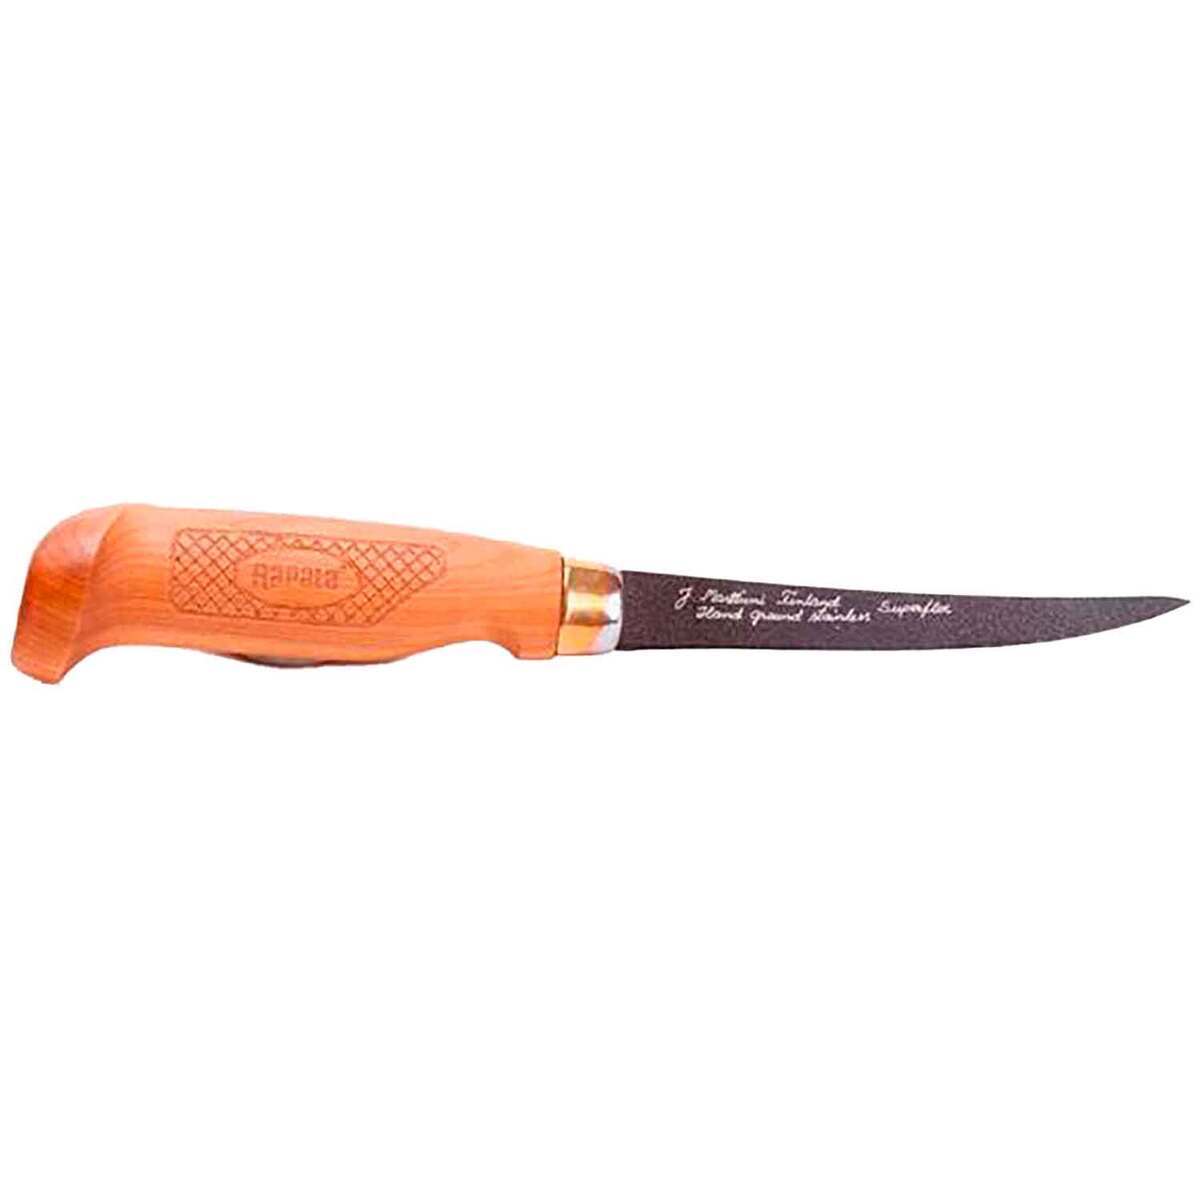 https://www.knives.com/medias/rapala-fish-n-fillet-superflex-fillet-knife-wood-4in-1142627-1.jpg?context=bWFzdGVyfGltYWdlc3wyNDk5NHxpbWFnZS9qcGVnfGhjNS9oNDEvMTA3OTY4MDM5NDg1NzQvMTE0MjYyNy0xX2Jhc2UtY29udmVyc2lvbkZvcm1hdF8xMjAwLWNvbnZlcnNpb25Gb3JtYXR8MTYxNjQ1YjQ3OWEzMjNjYzA1YzI1ZjZmM2ZlMmYxYzlmZDU5MzNiNmU5ZmMyMmJkMTkzNjVhYjkwZjRmMTg2Zg